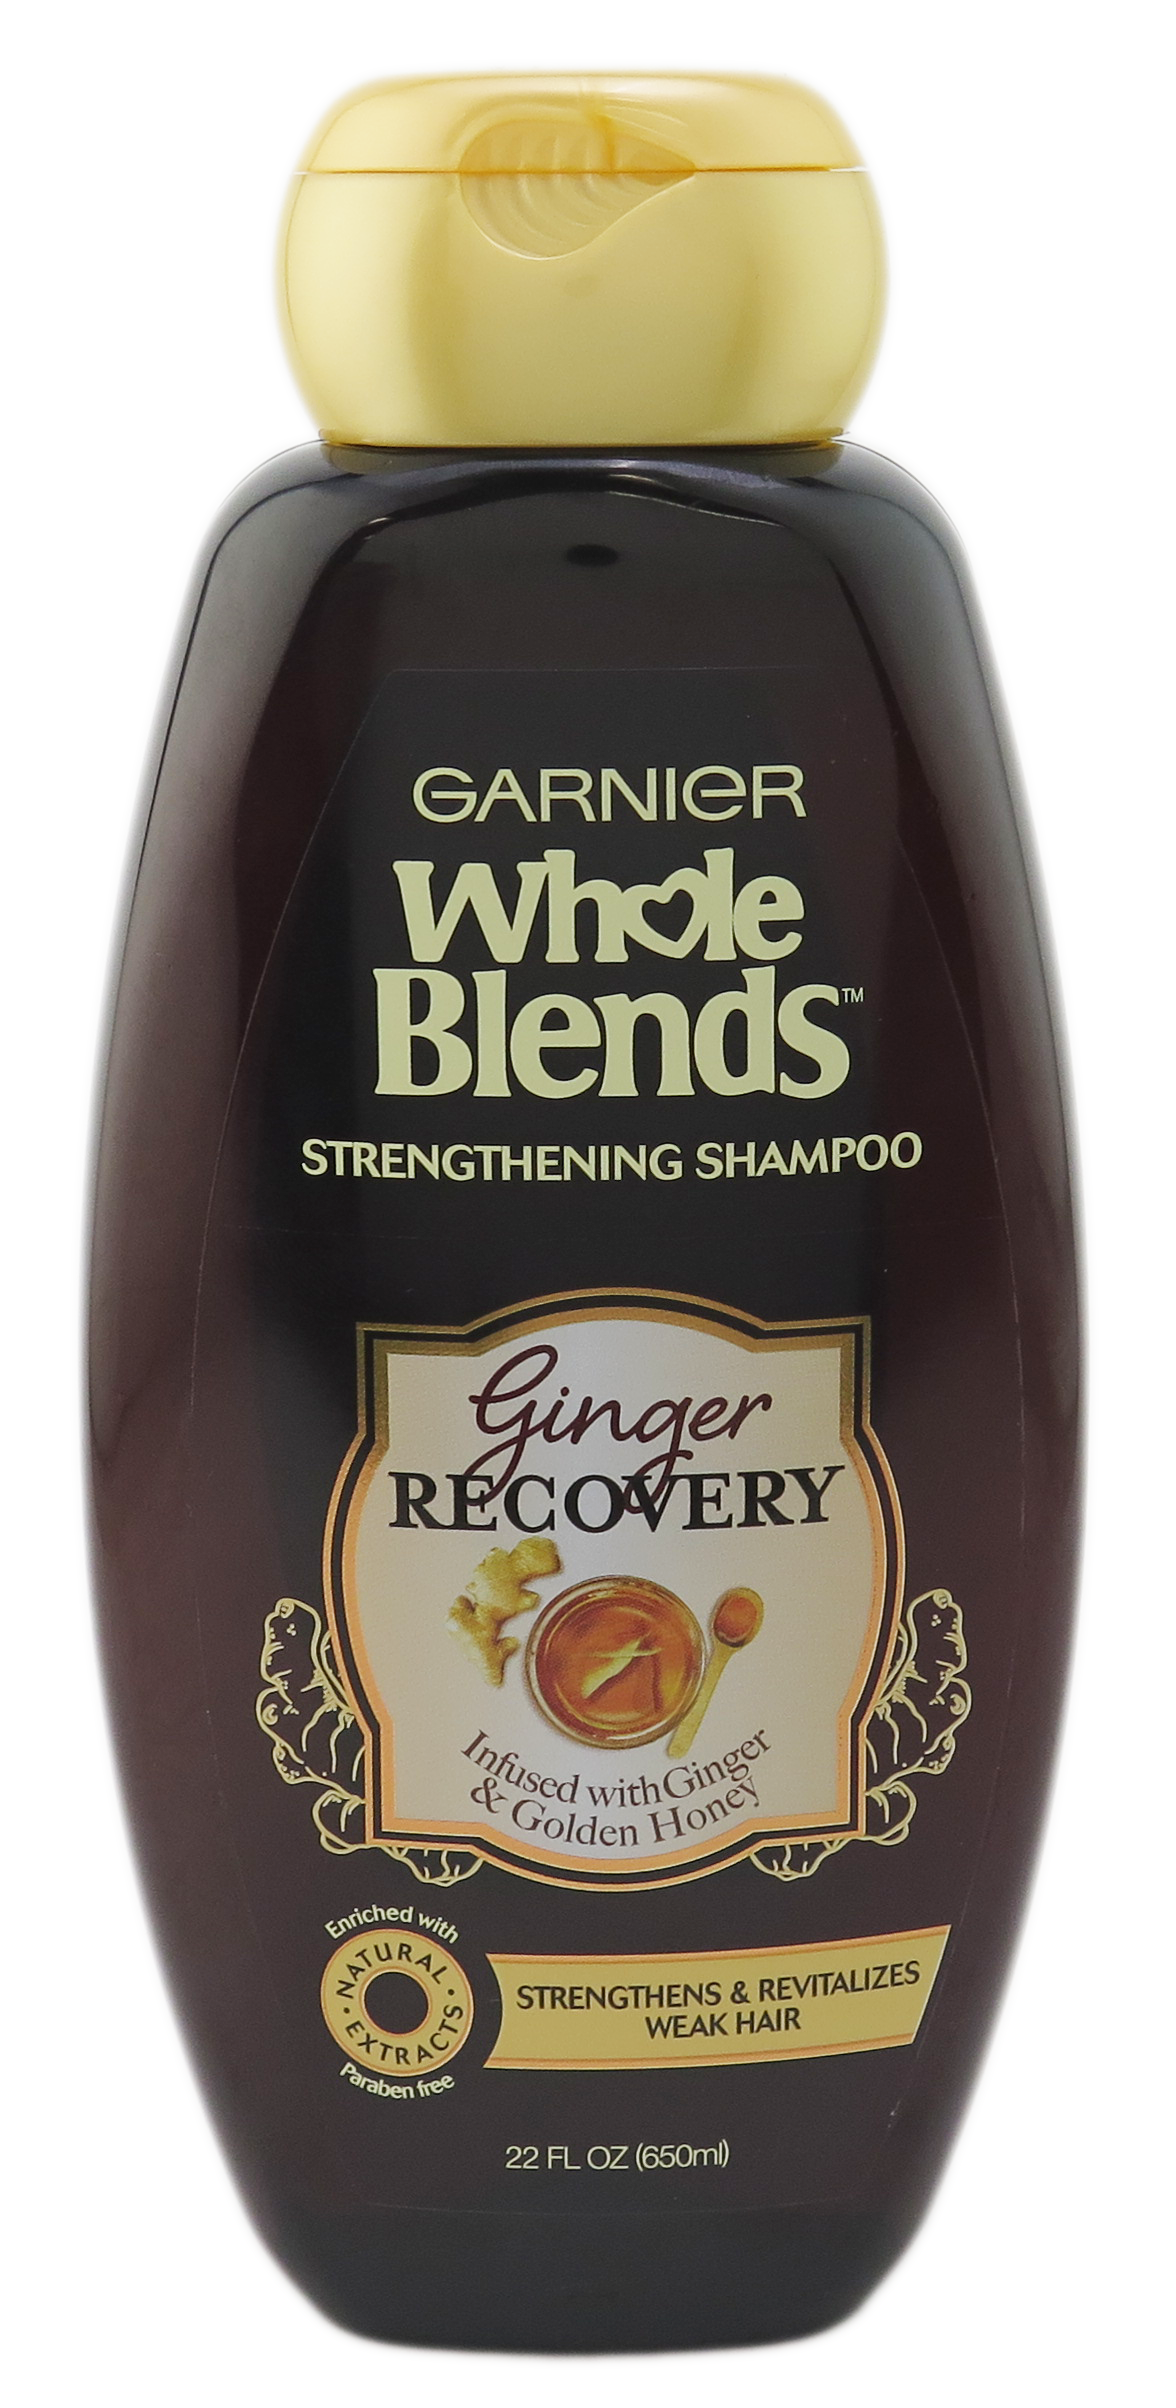 Garnier Whole Blends Ginger Recovery Strenghtening Shampoo 22 fl oz